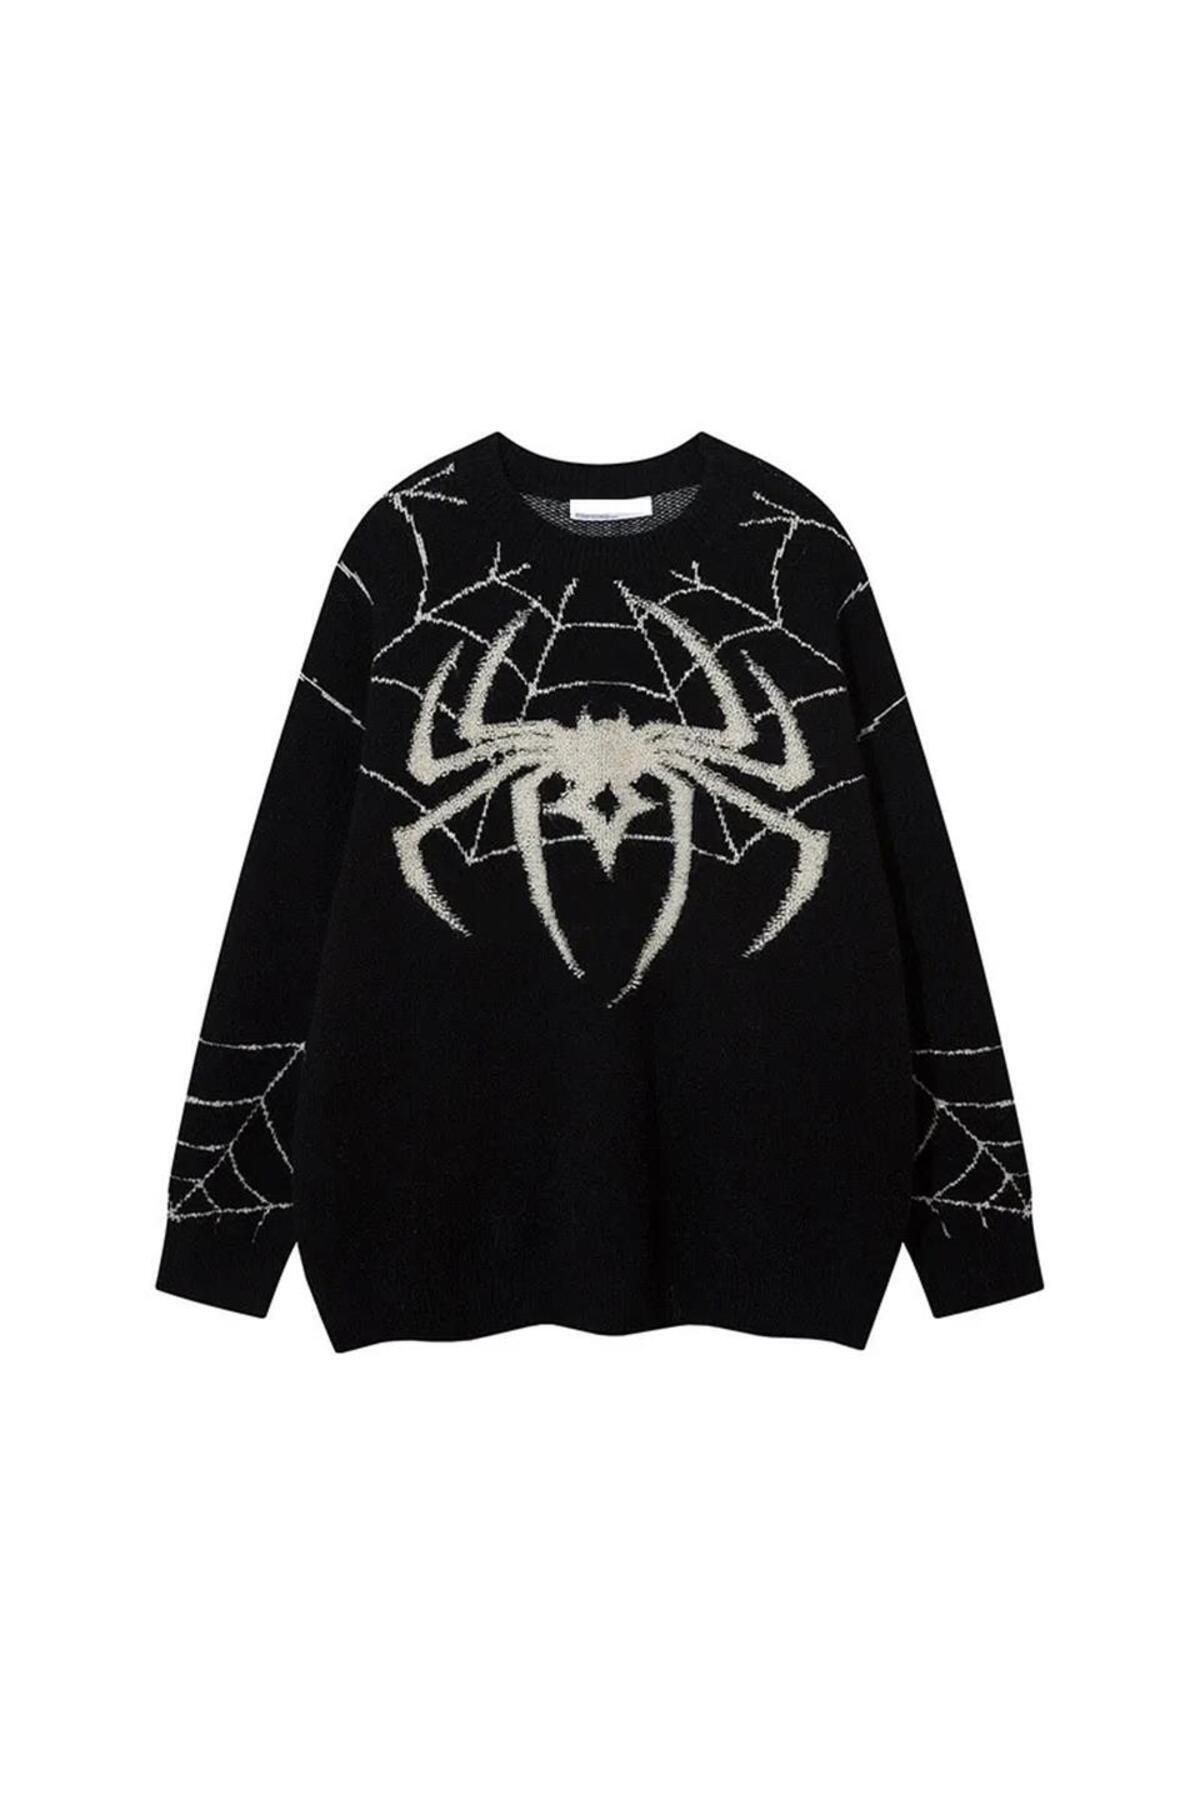 Gofeel Day Light Y2K Streetwear Spider Web Oversize Unisex Siyah Kazak